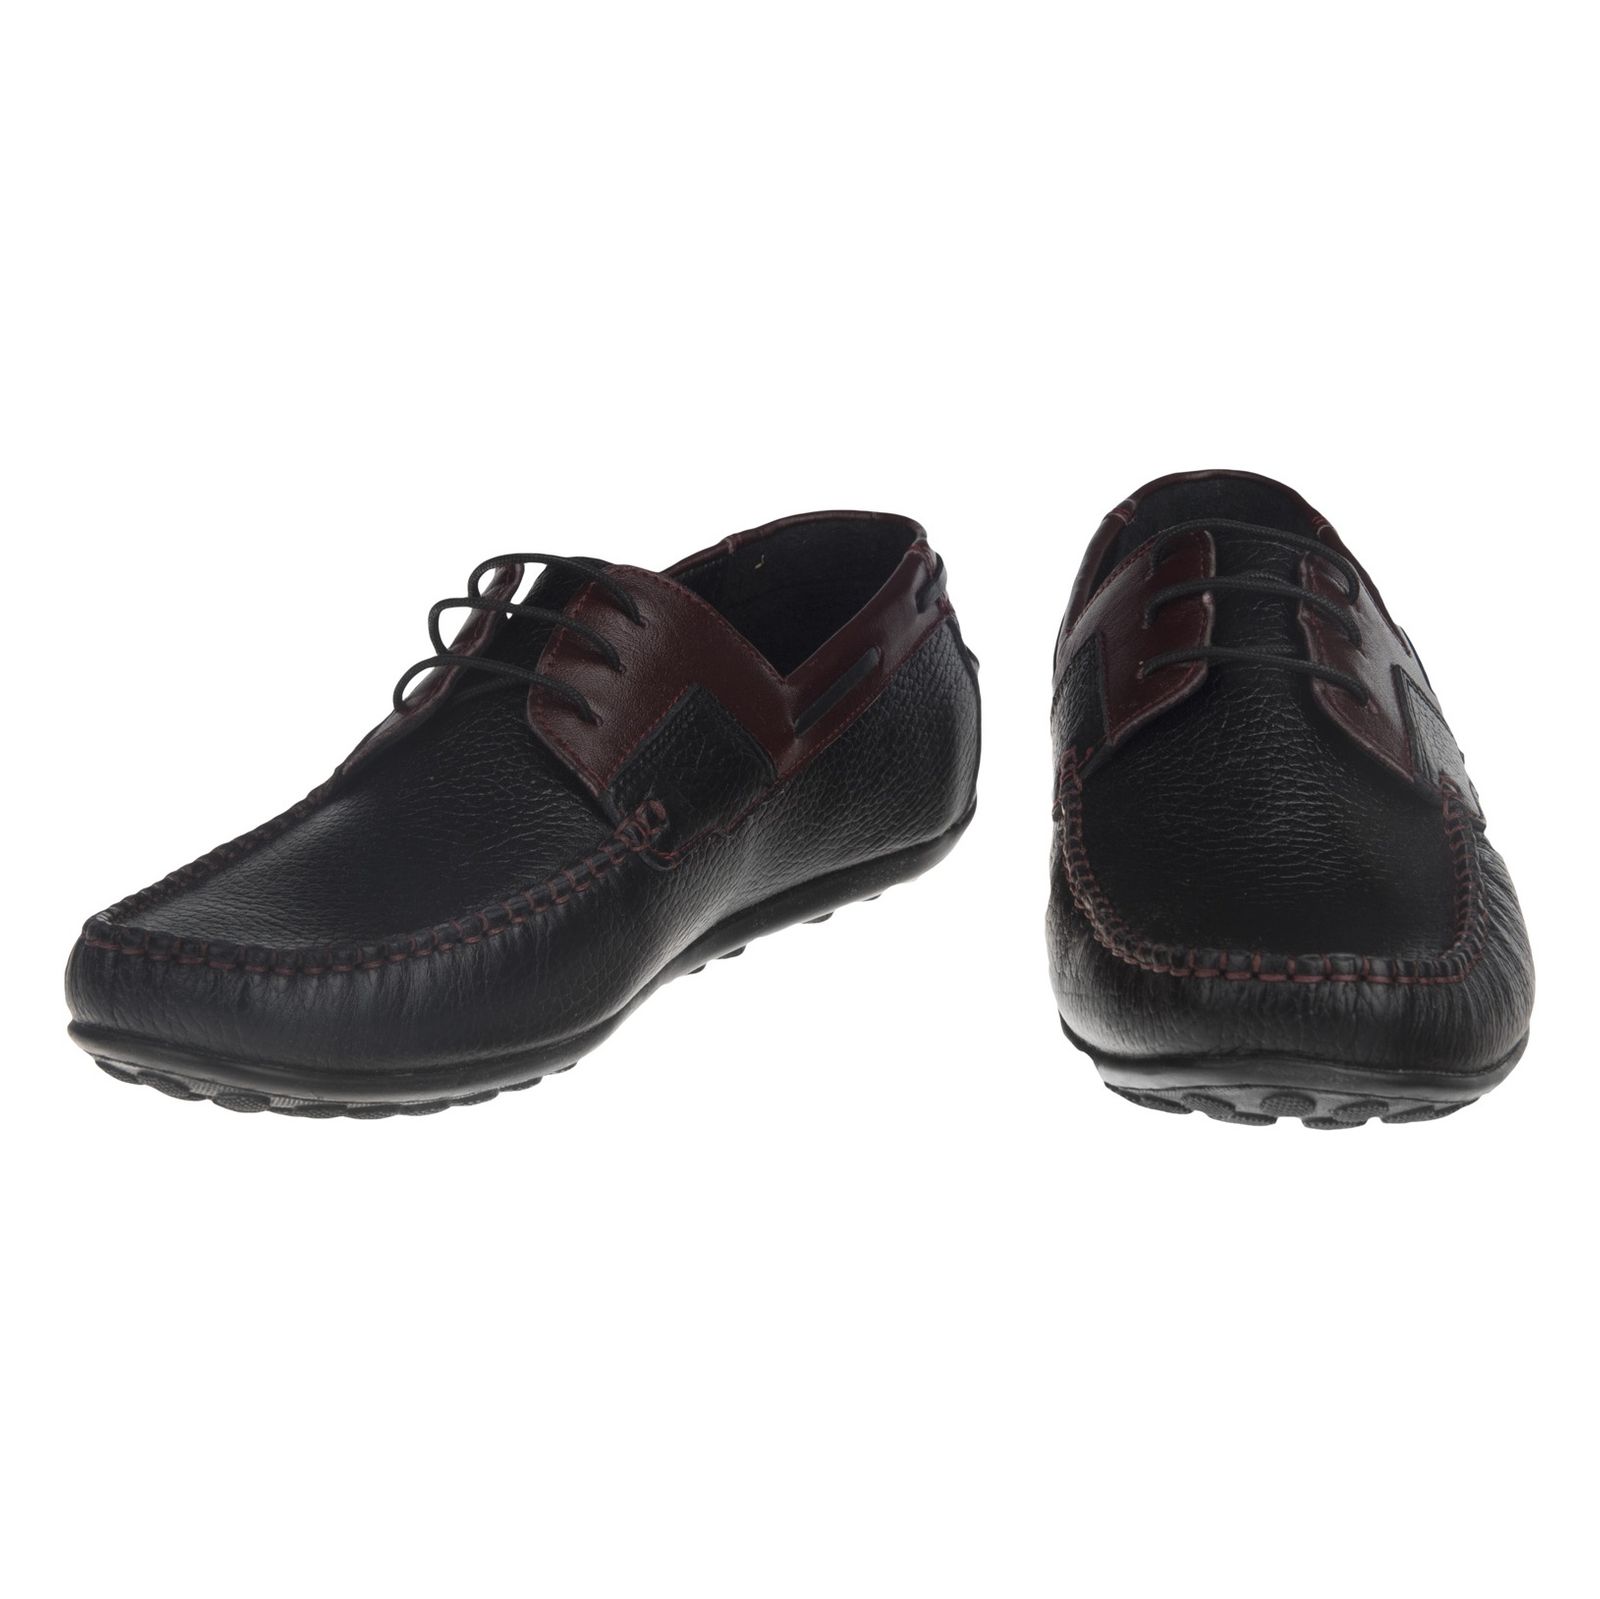 کفش روزمره مردانه بلوط مدل 7126A503-130 - مشکی زرشکی - 5